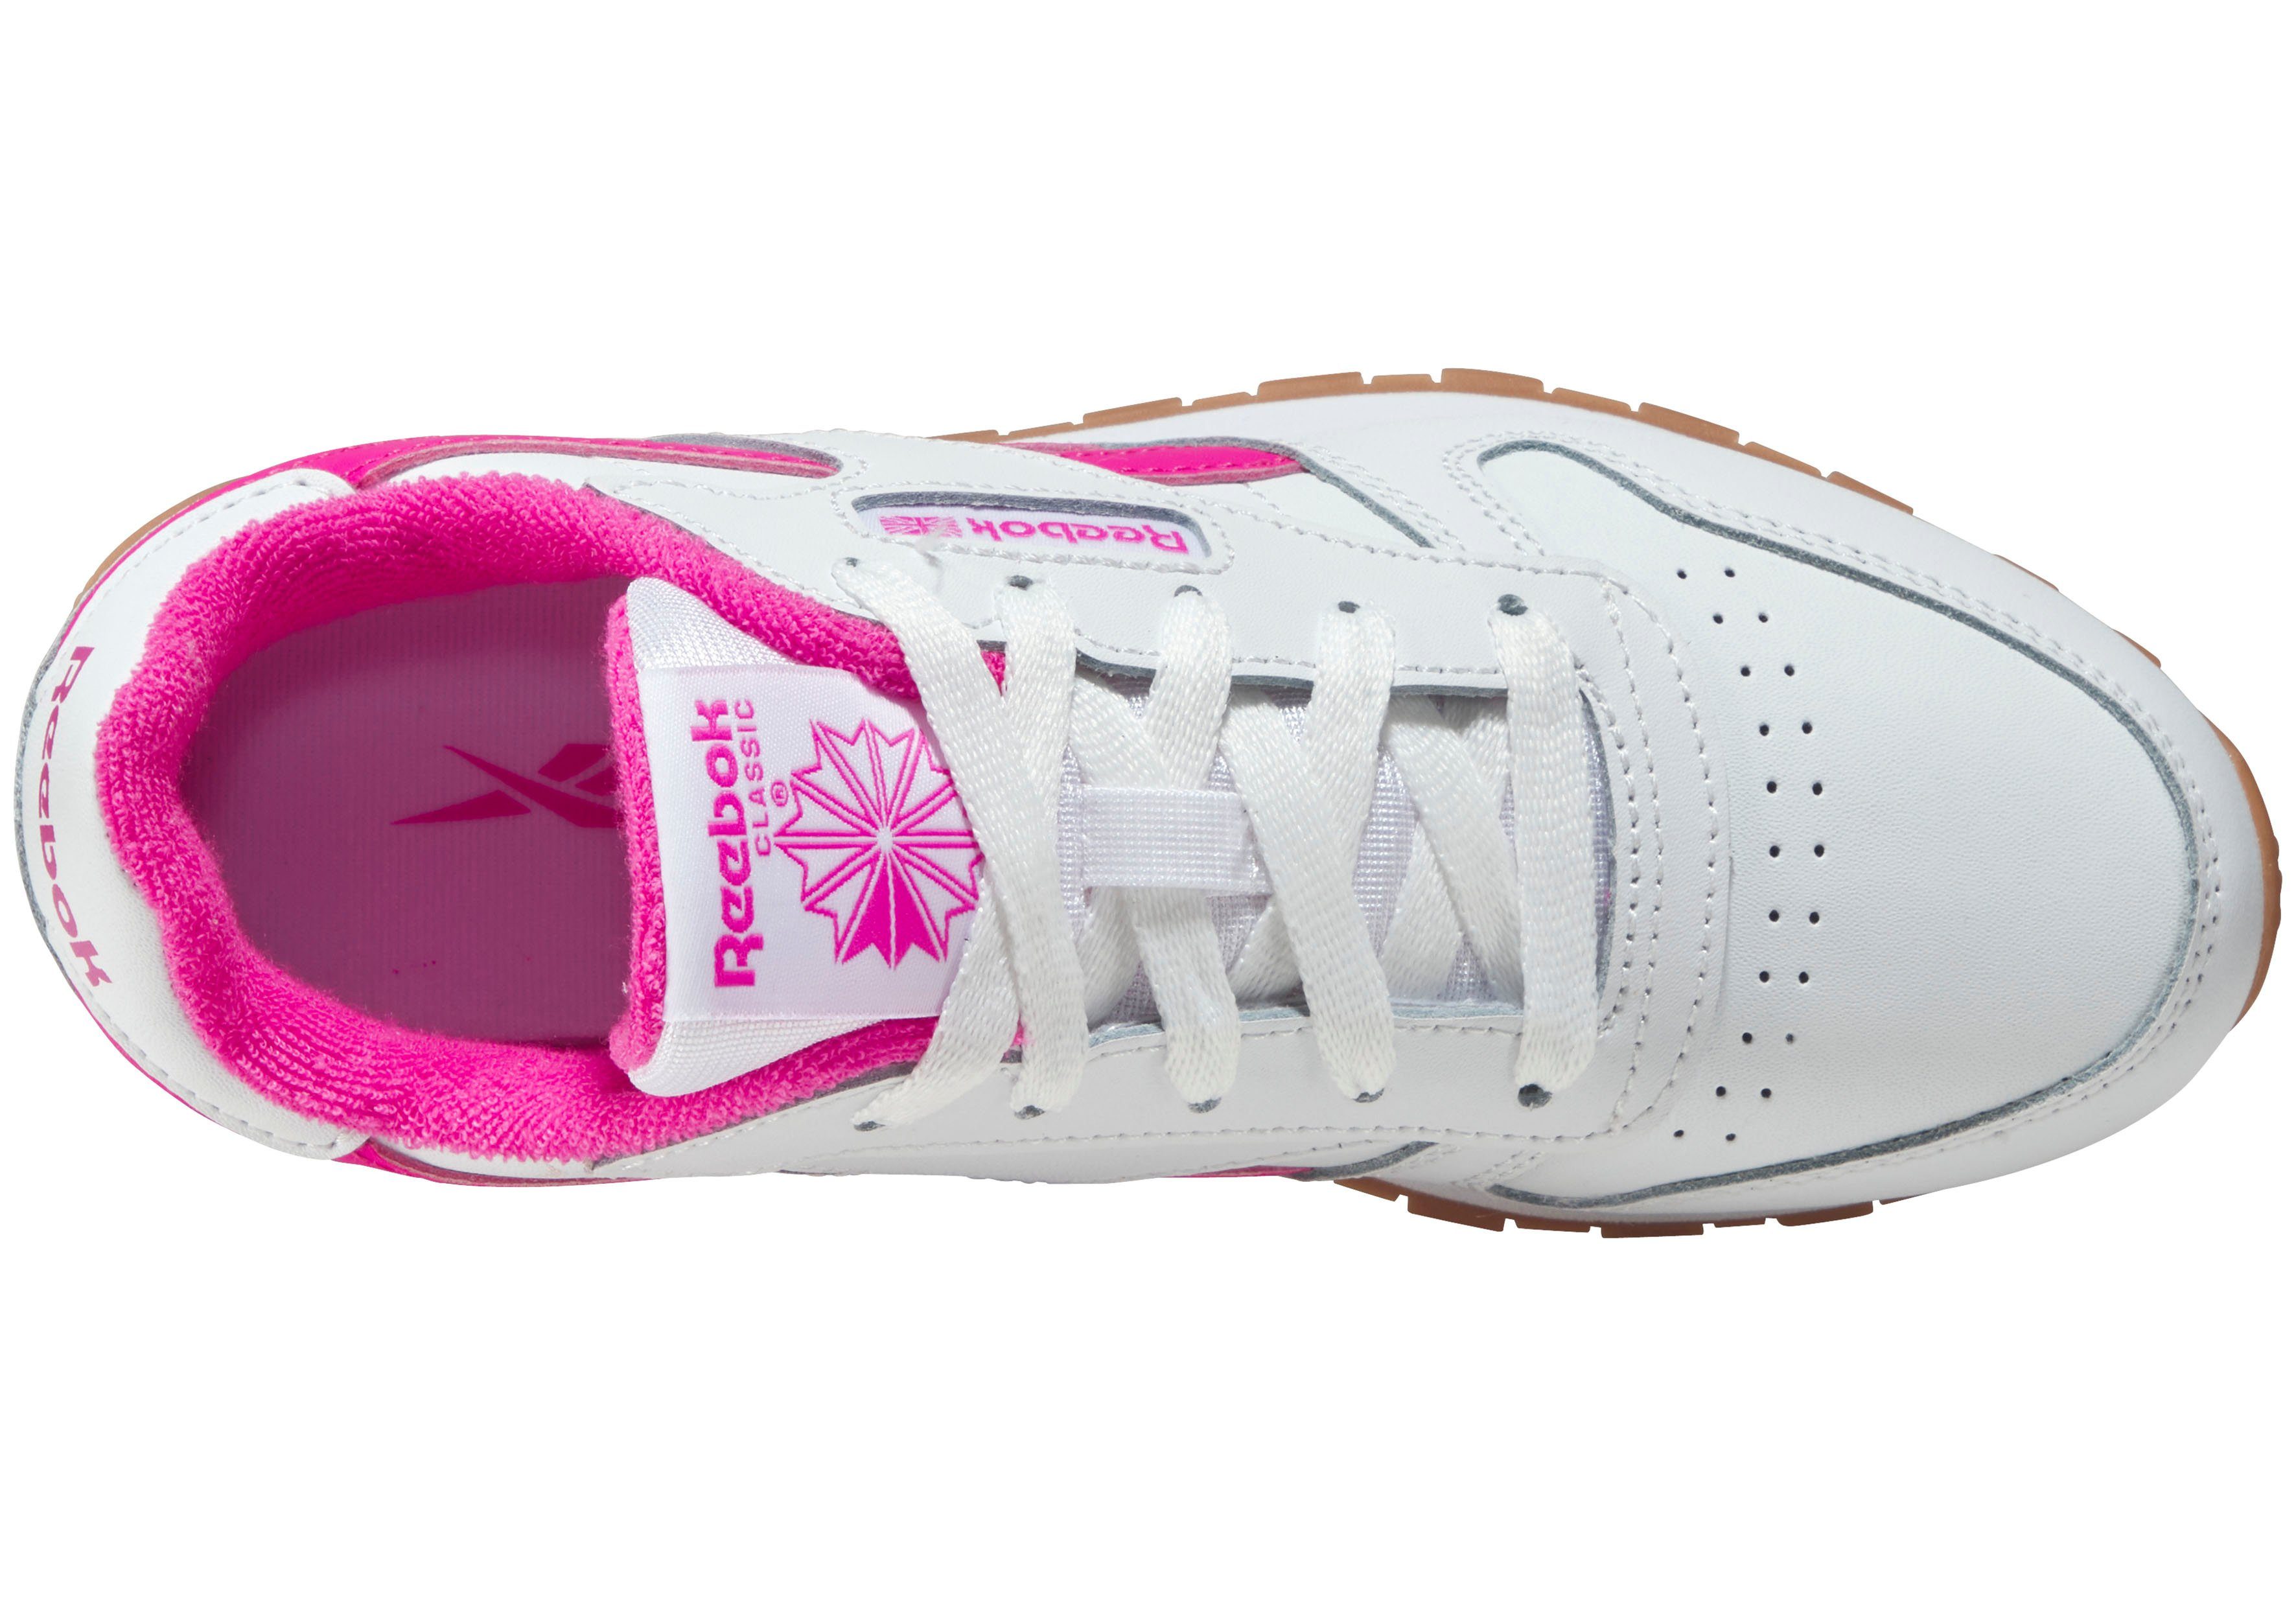 weiß-pink CLASSIC Sneaker Reebok Classic LEATHER